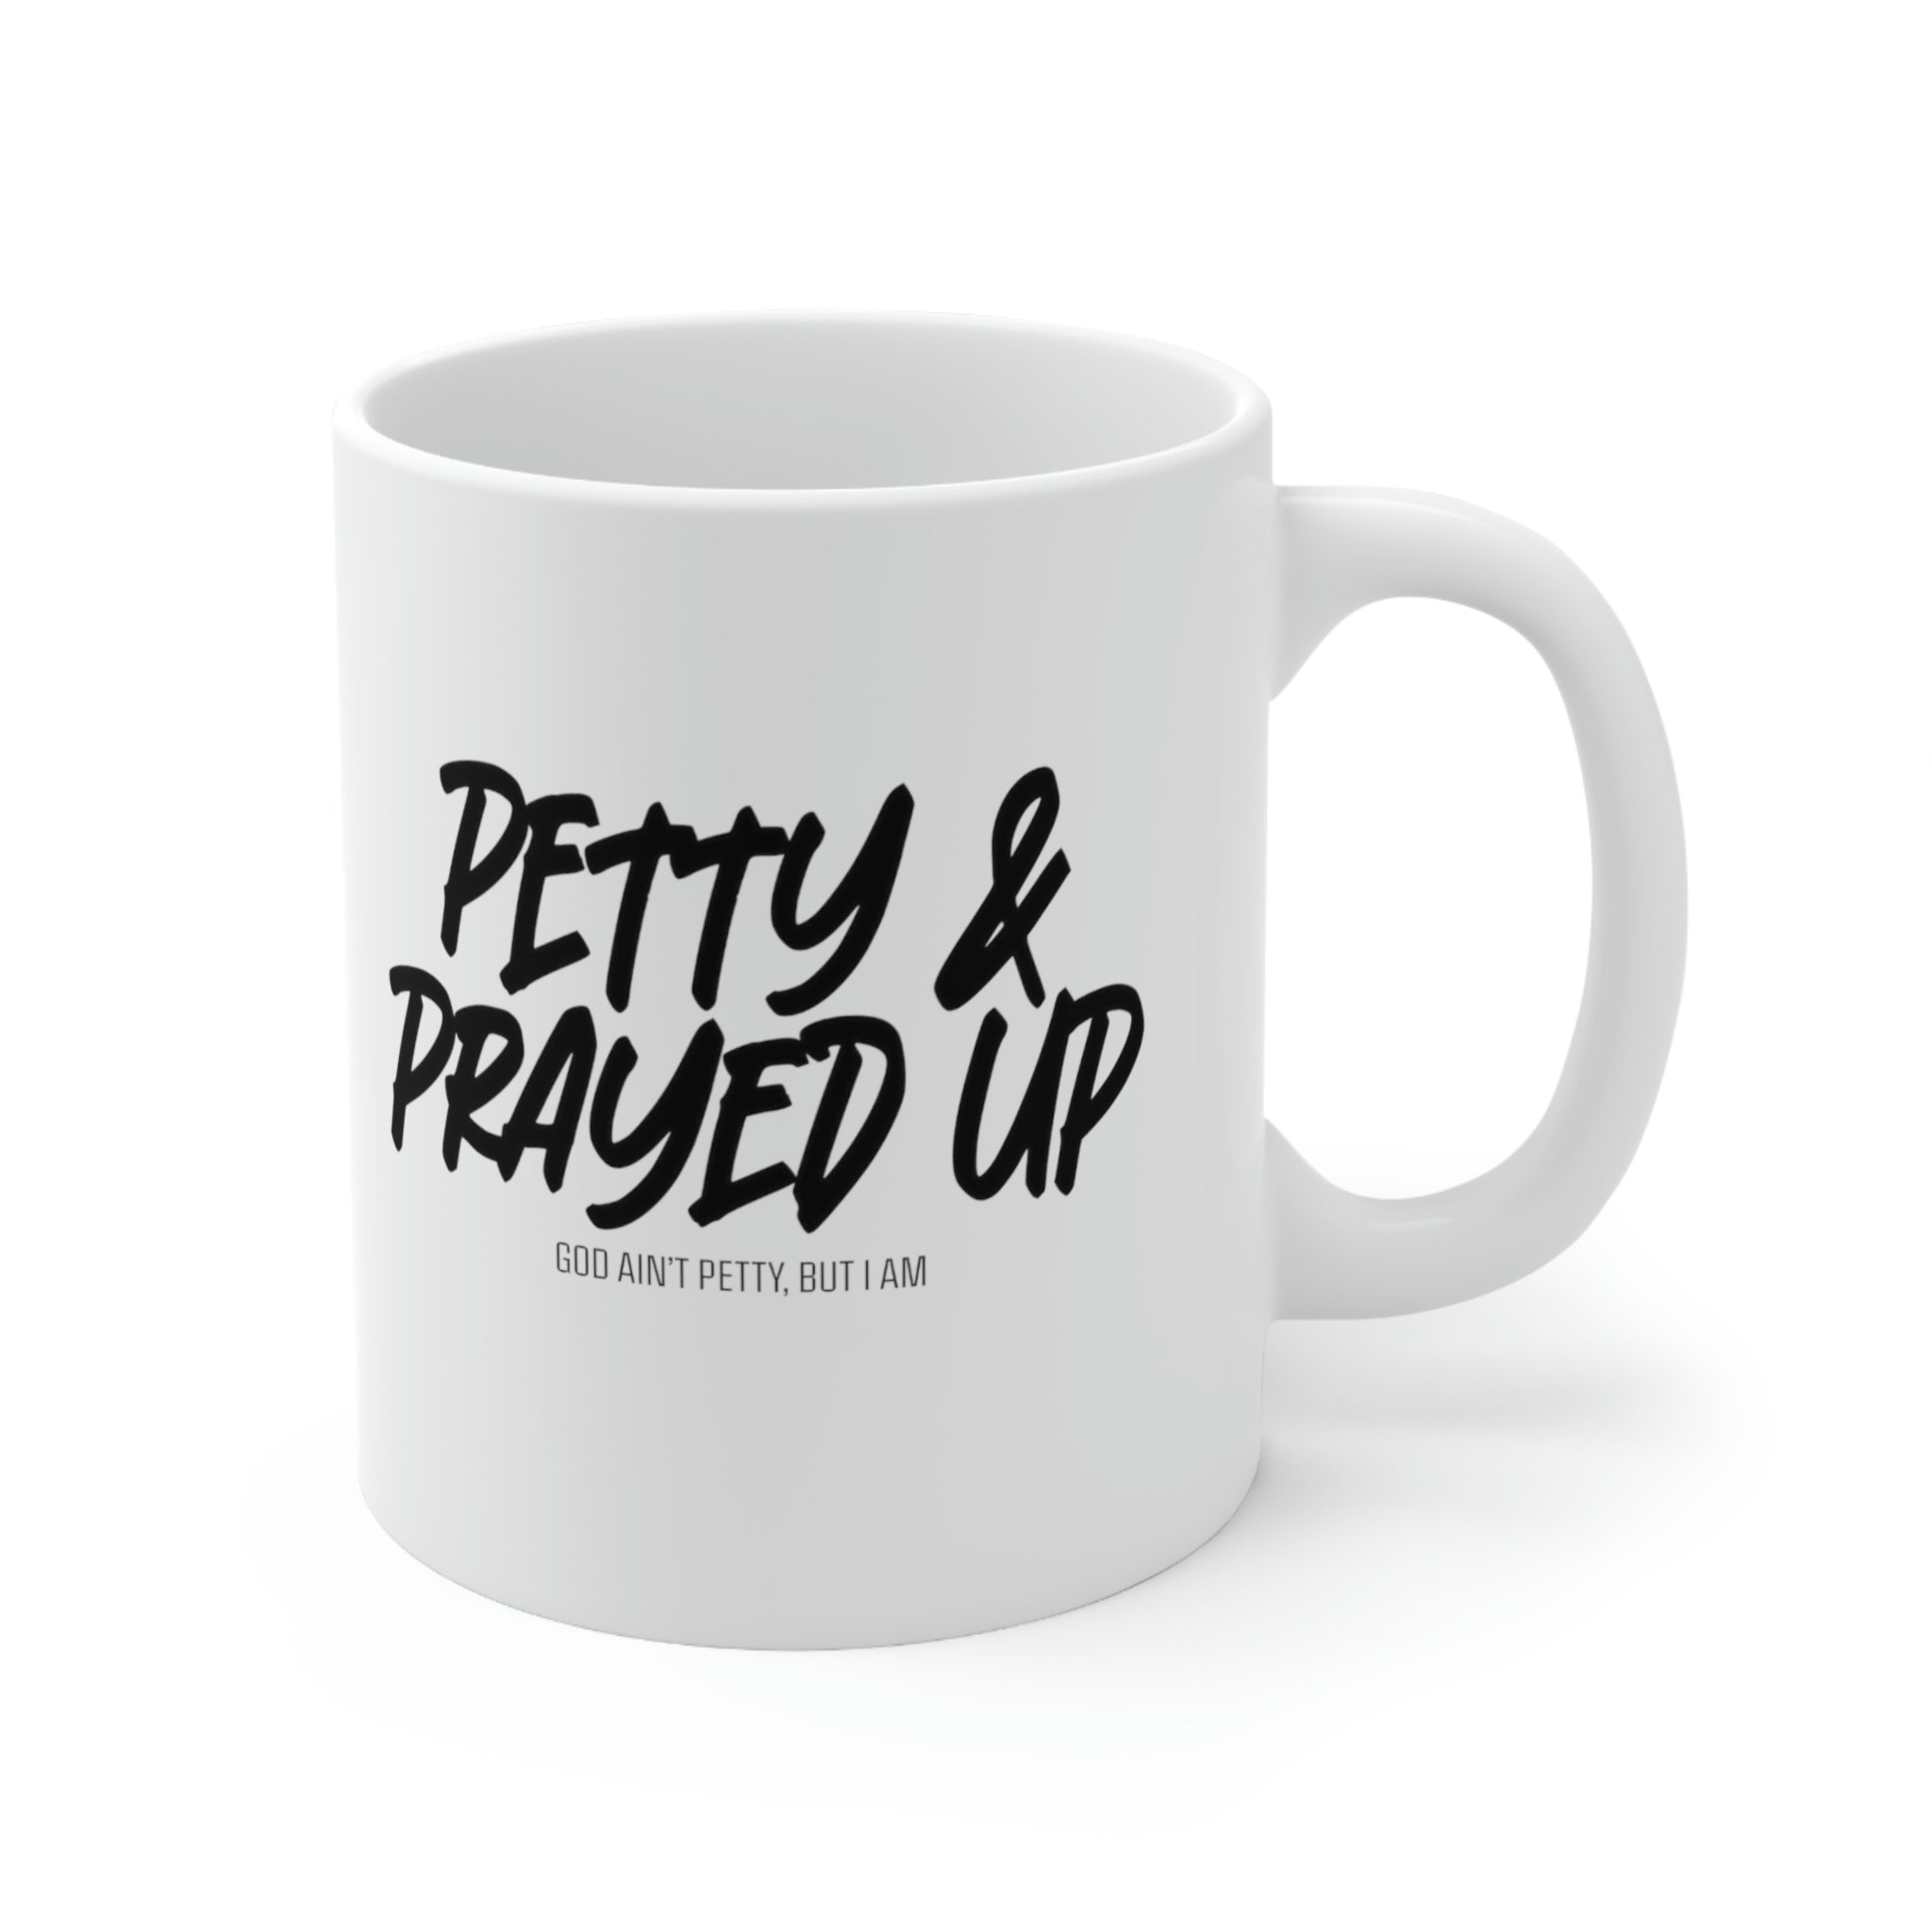 Petty and Prayed up Mug 11oz (White/Black)-Mug-The Original God Ain't Petty But I Am